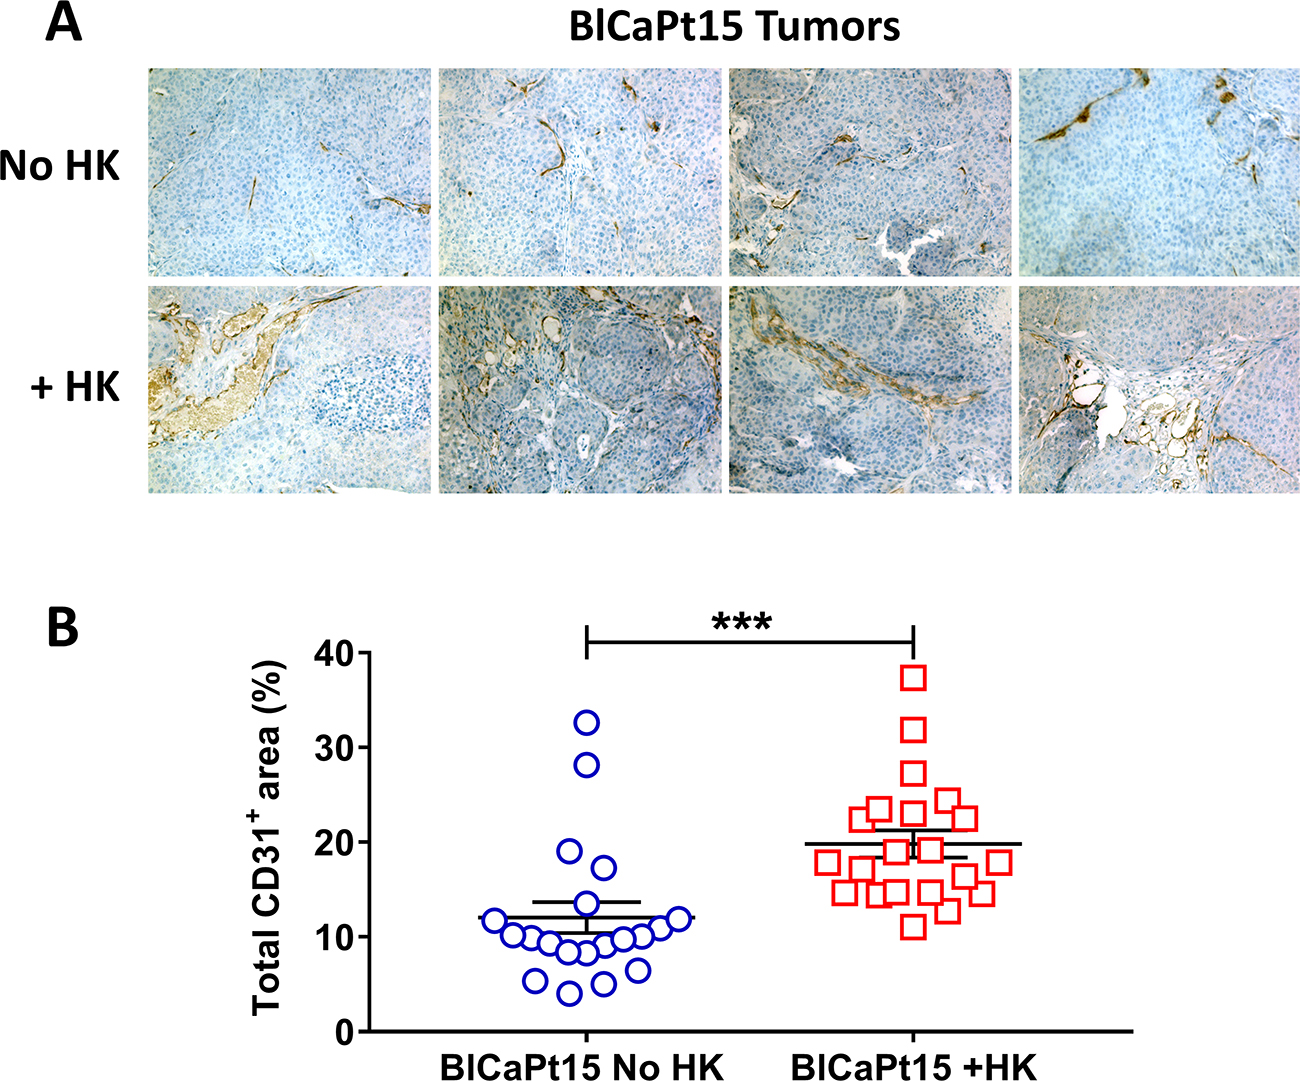 LN stromal HK cells support UCC tumor angiogenesis in the IB model.